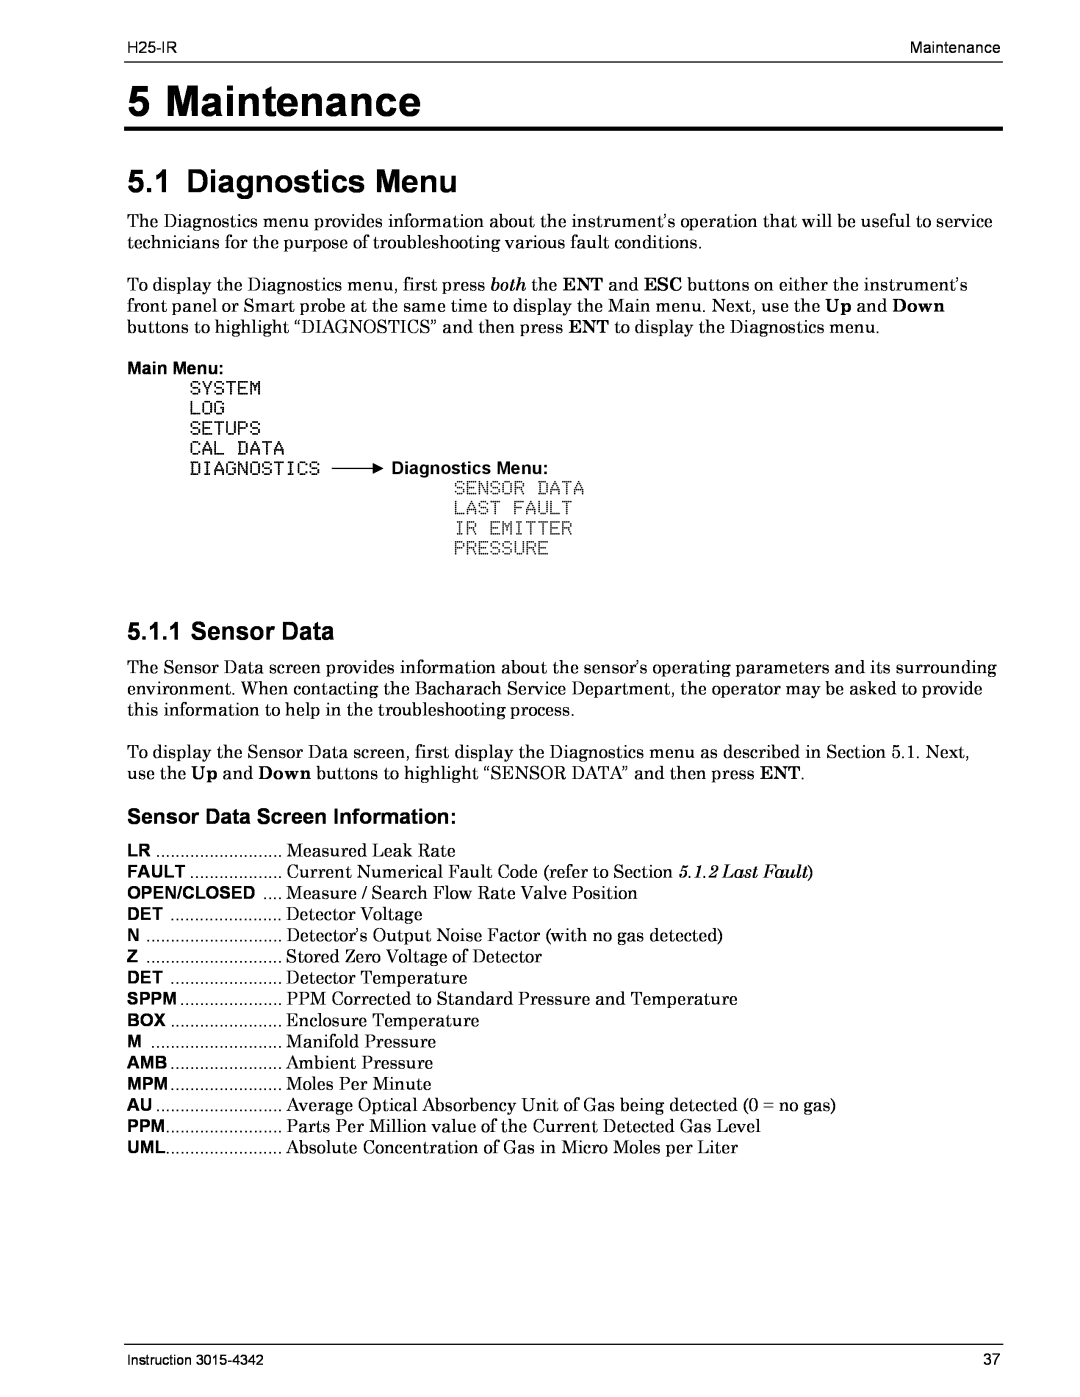 Bacharach H25-IR manual Maintenance, Diagnostics Menu, Sensor Data Screen Information 